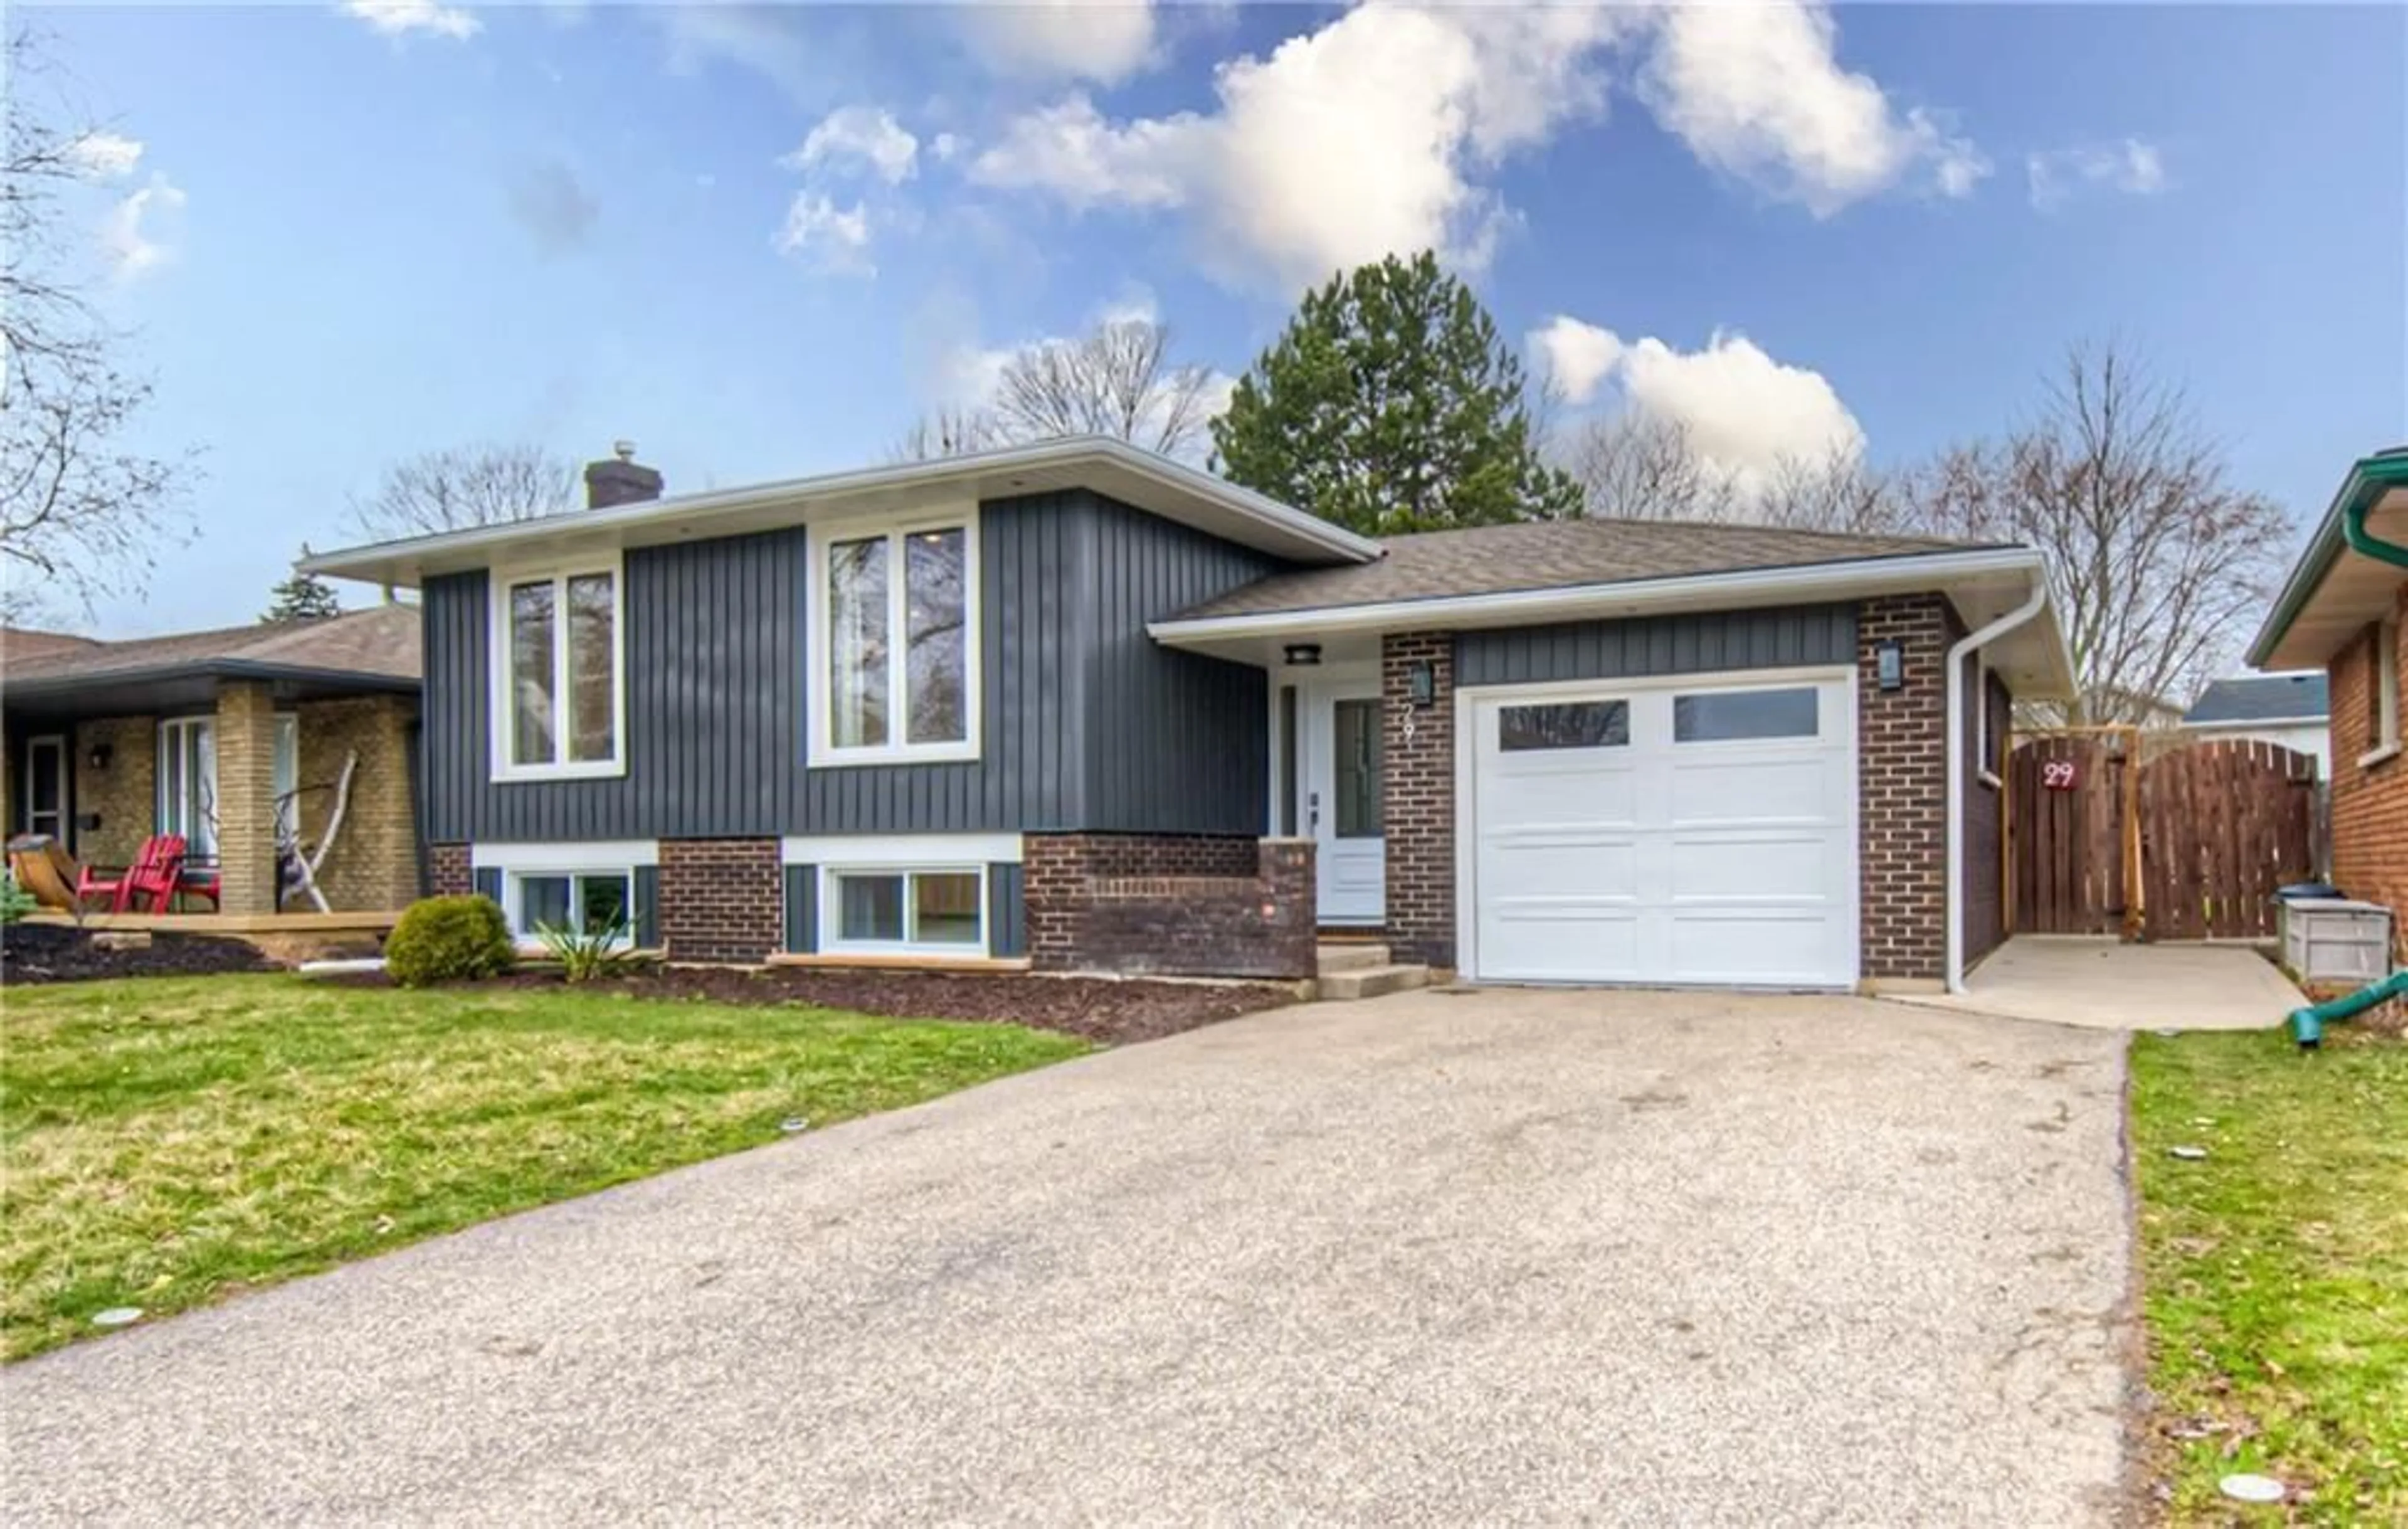 Home with brick exterior material for 29 Ashgrove Ave, Brantford Ontario N3R 6E1